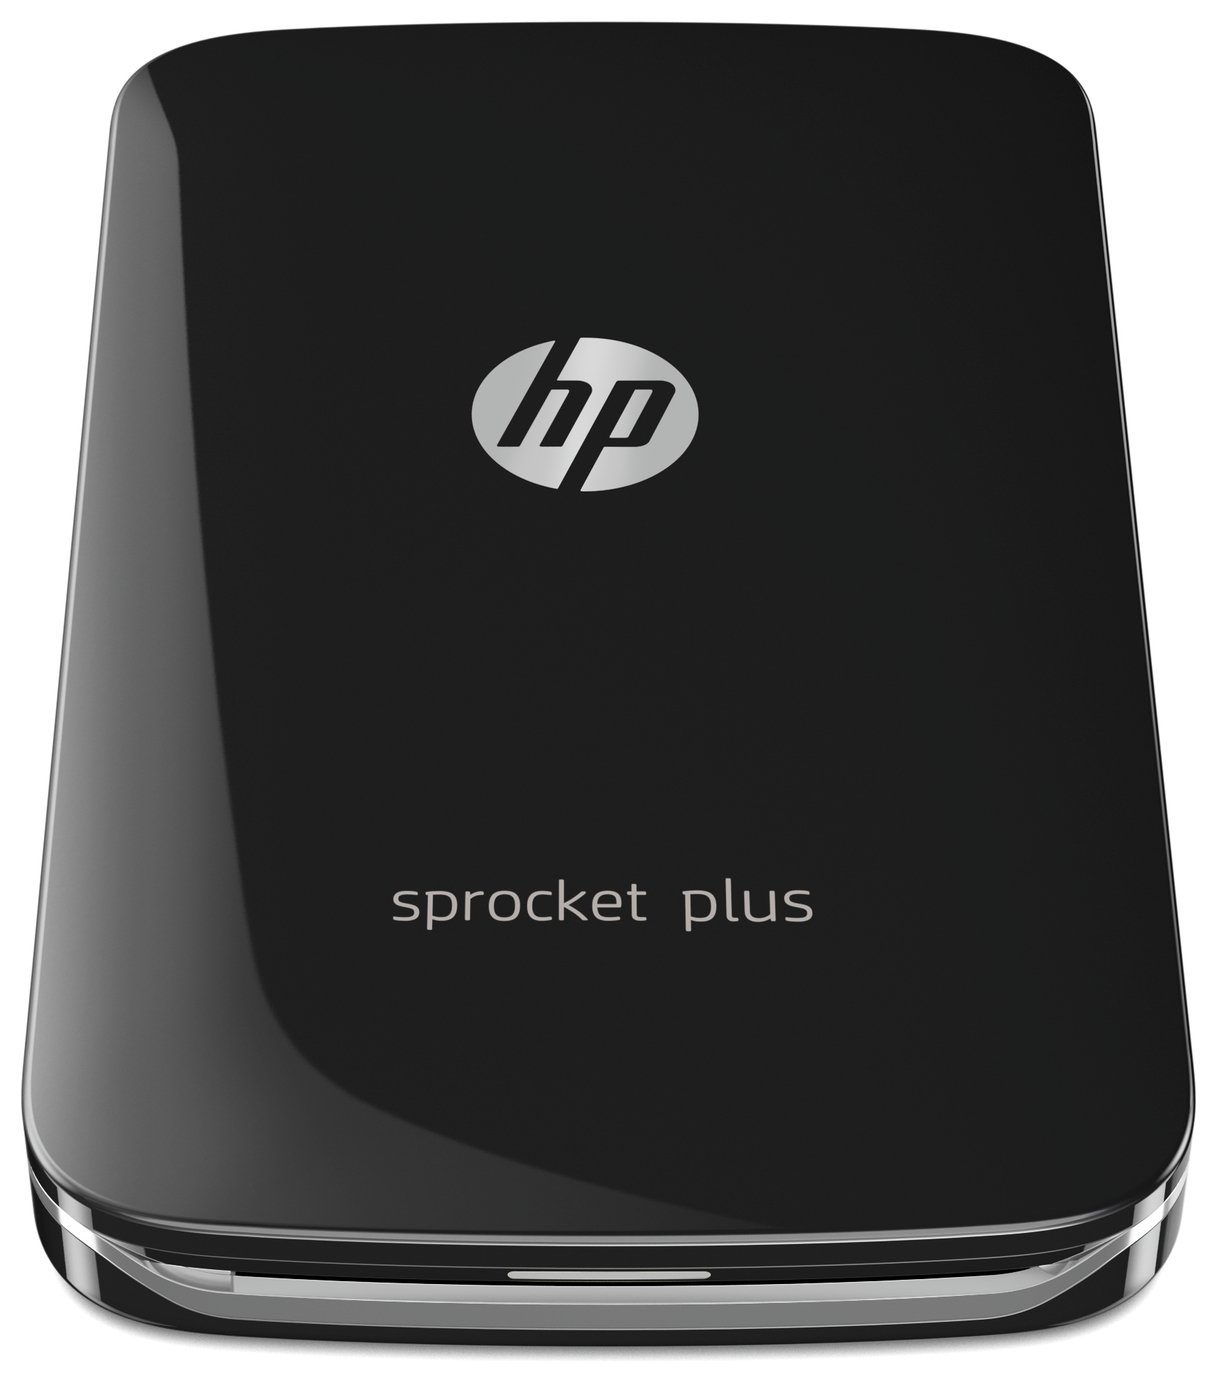 HP Sprocket Plus Portable Photo Printer Black Review